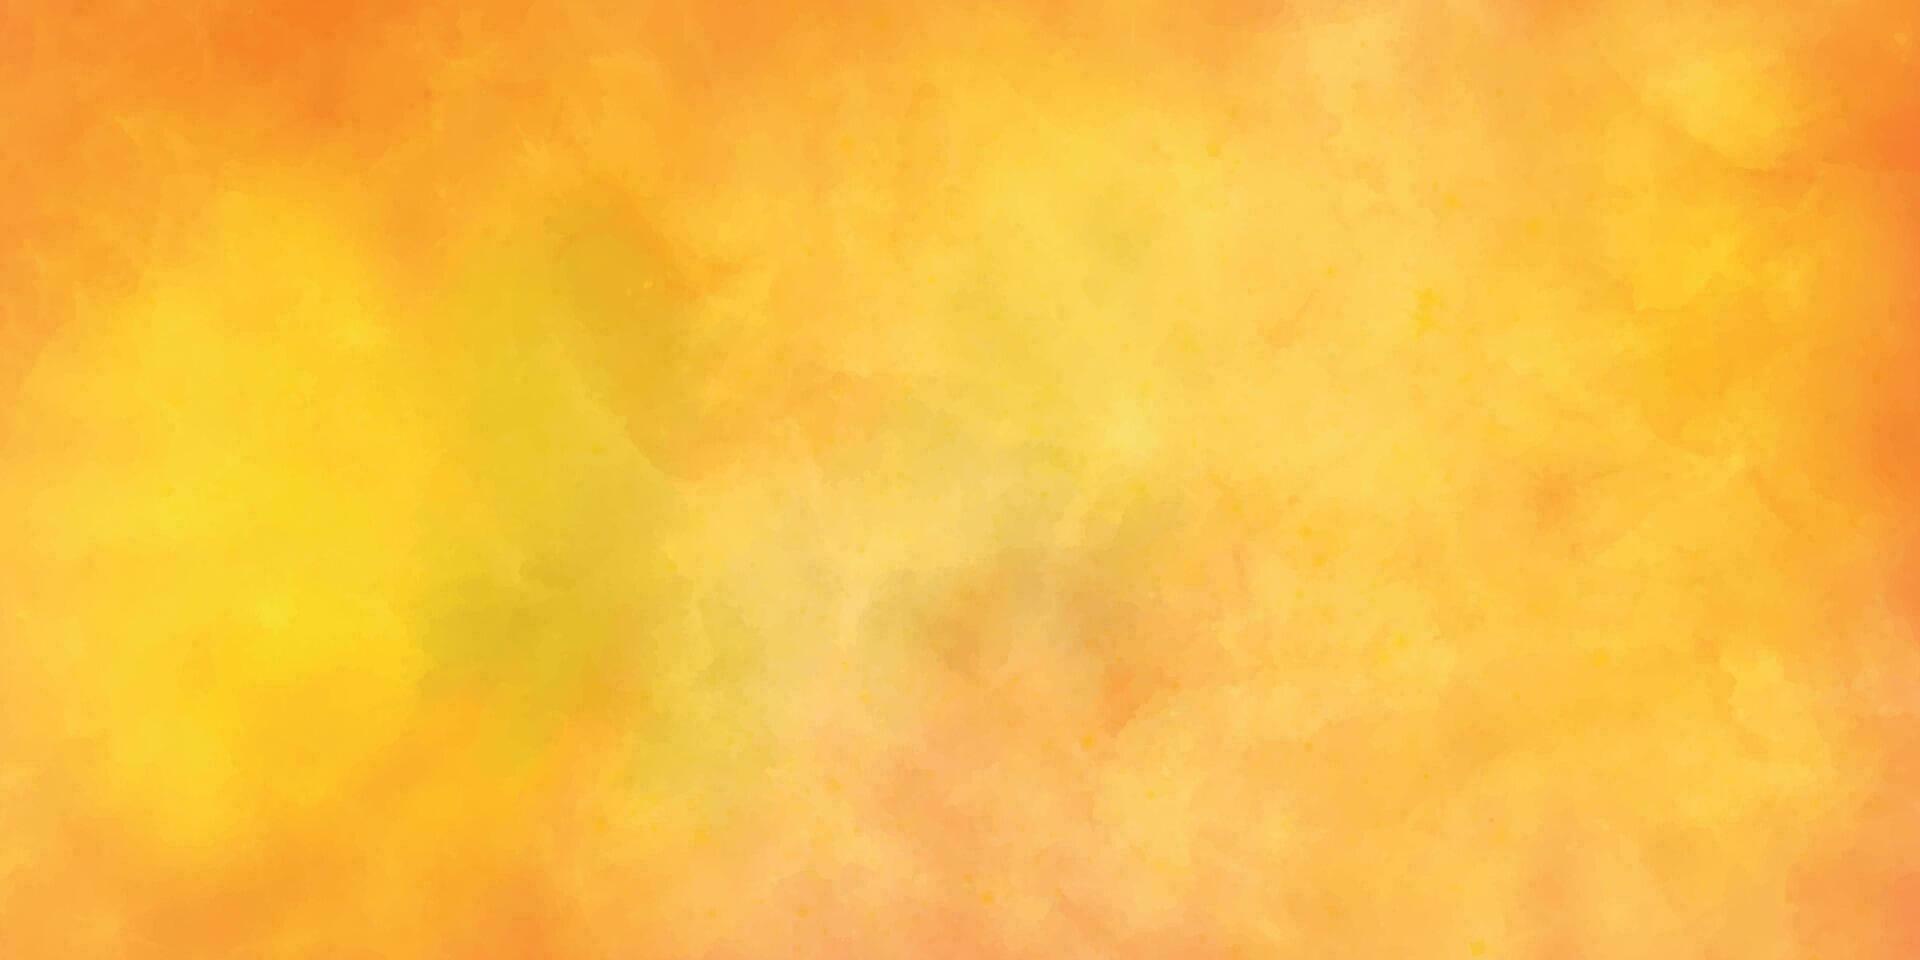 Yellow and Orange Watercolor. Watercolor Background. Yellow and Orange Background with a Watercolor Effect vector